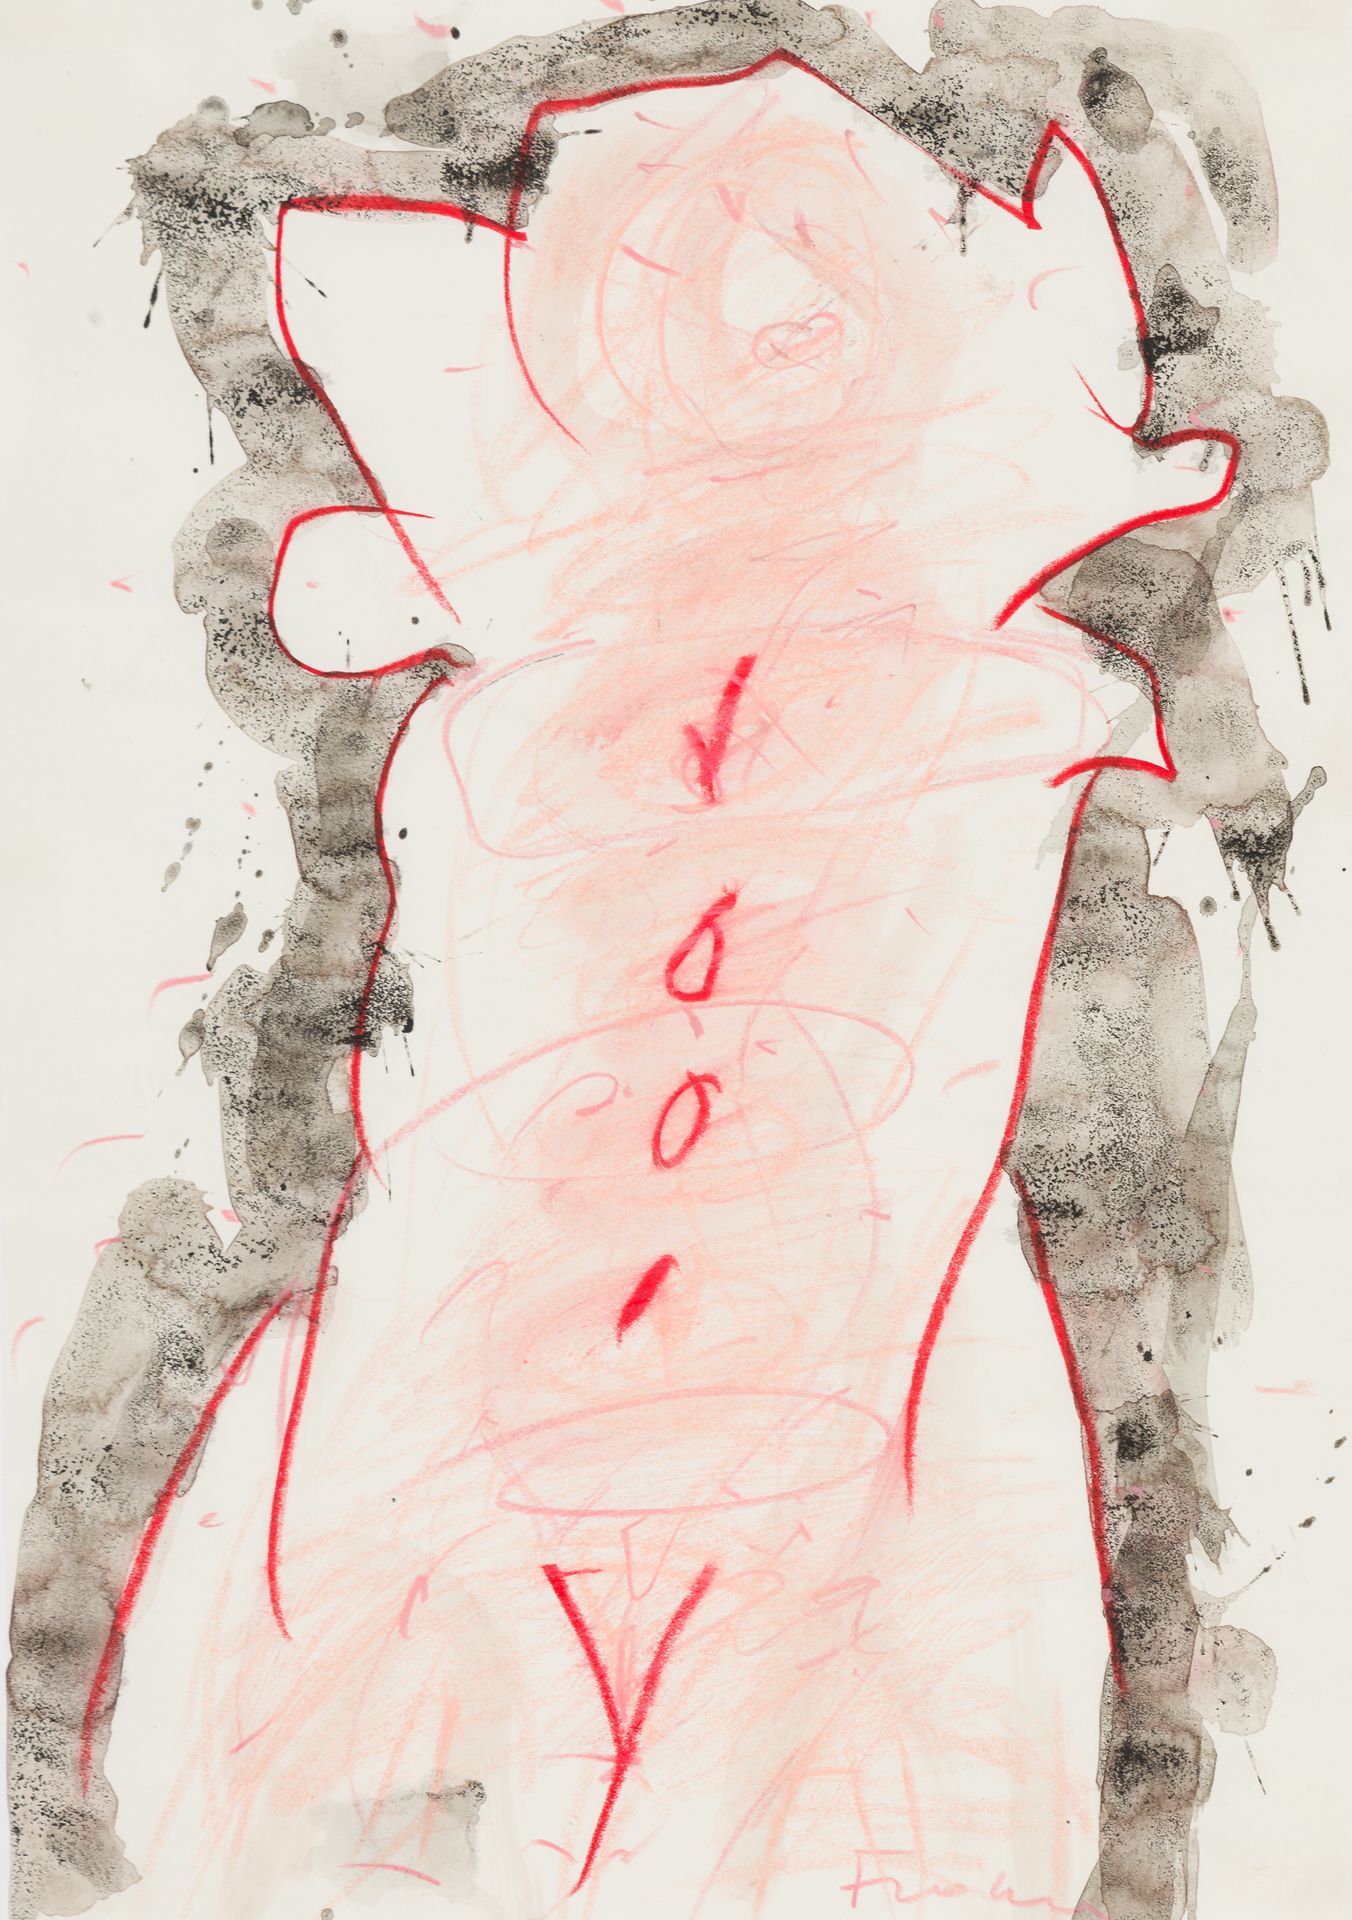 Frohner, Adolf 无题
纸上水彩和彩色粉笔
右下方有签名
纸张尺寸：60,5 x 42,5 cm
有框架的